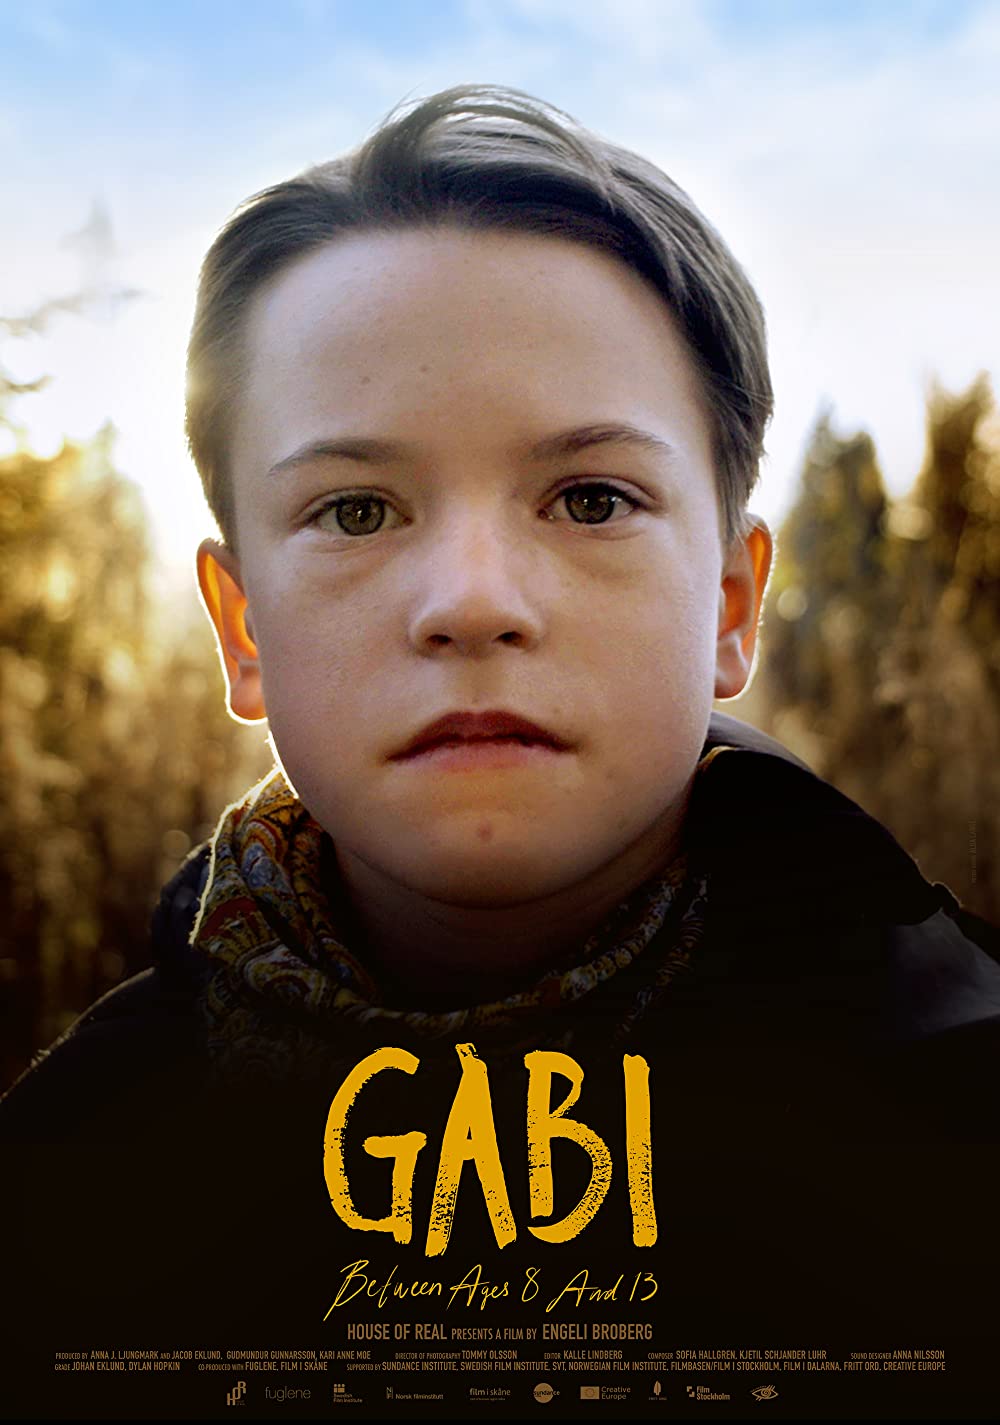 Gabi, mellan åren 8 och 13, Engeli Broberg